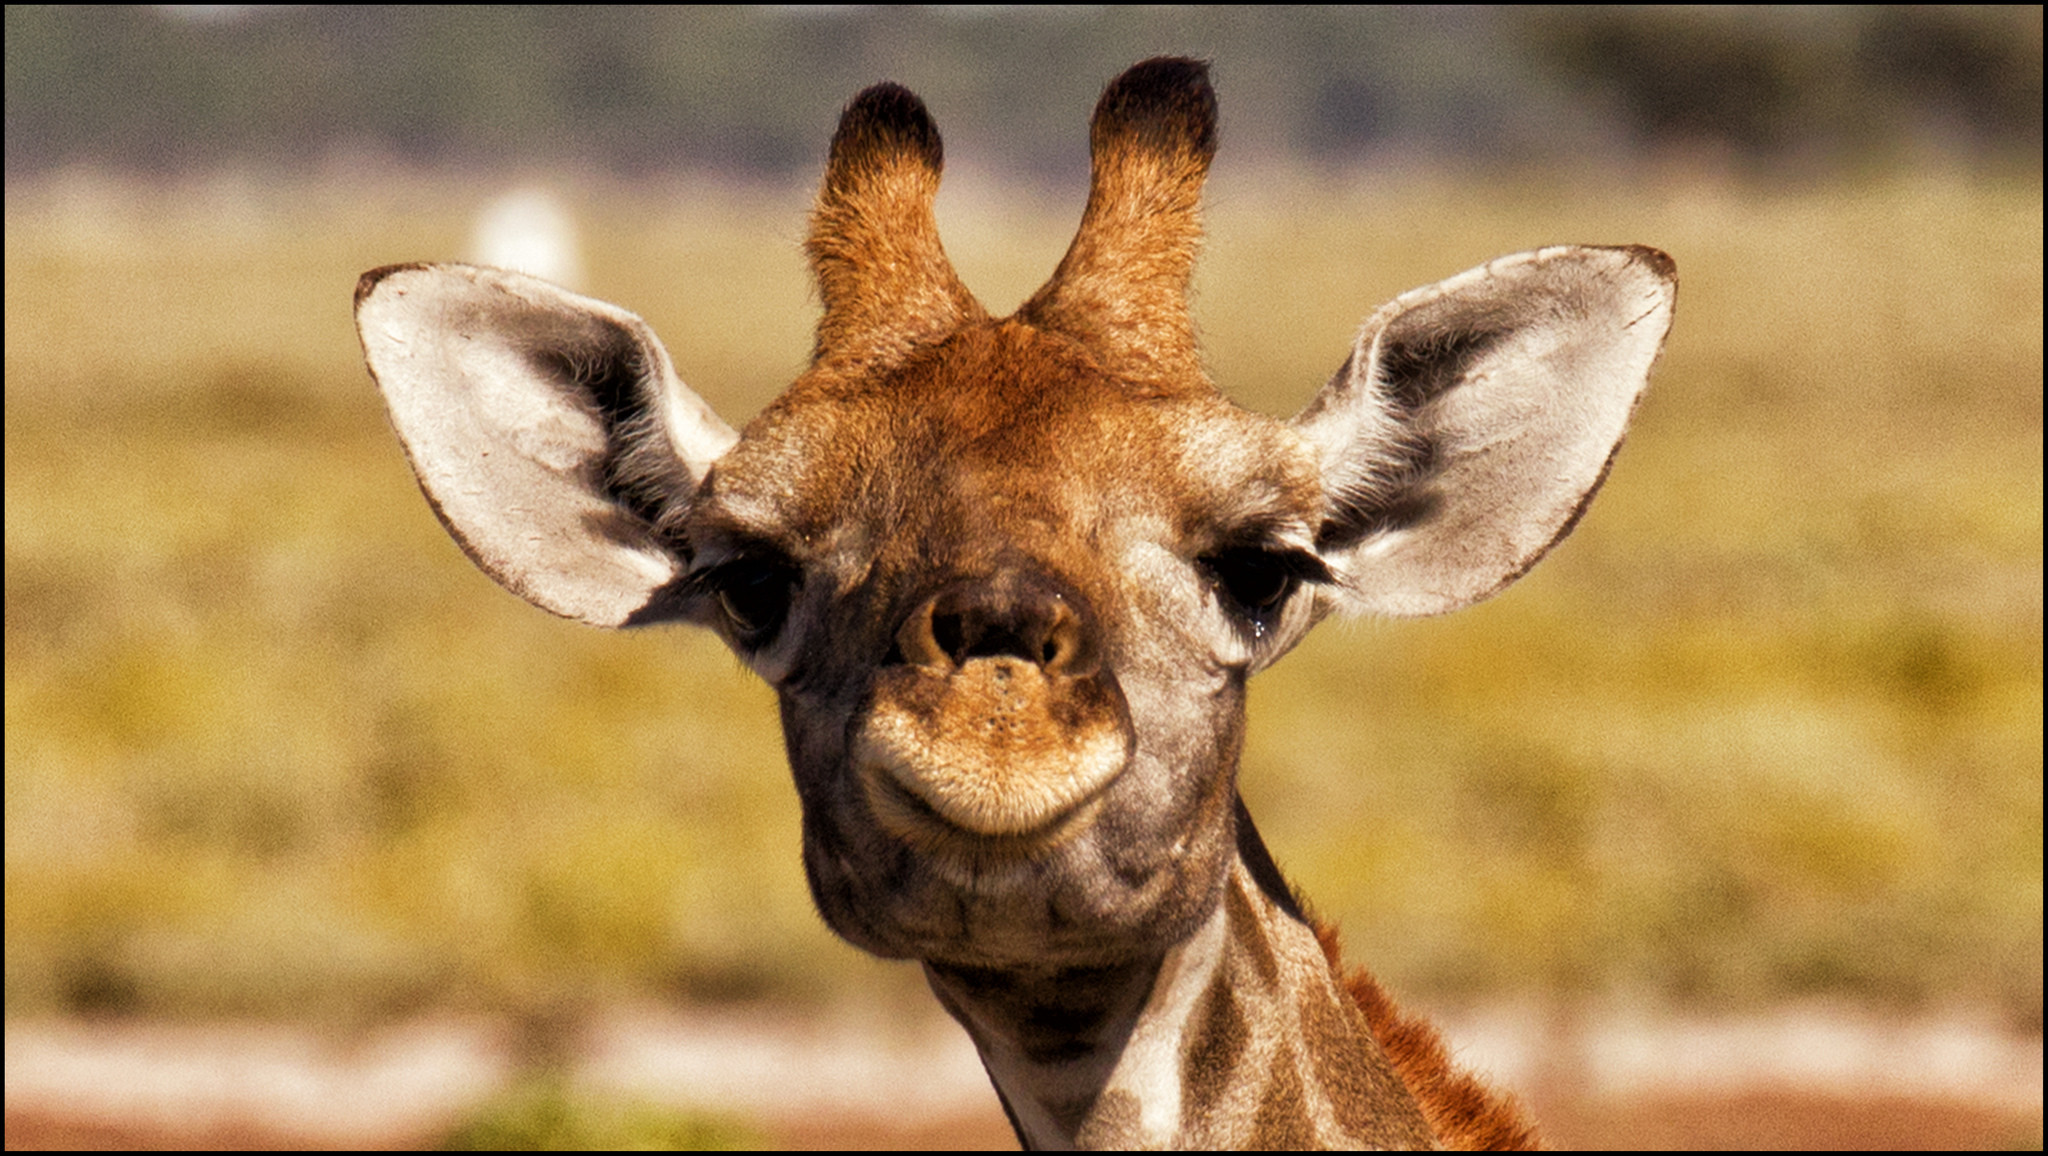 1000 Best Giraffe Photos  100 Free Download  Pexels Stock Photos